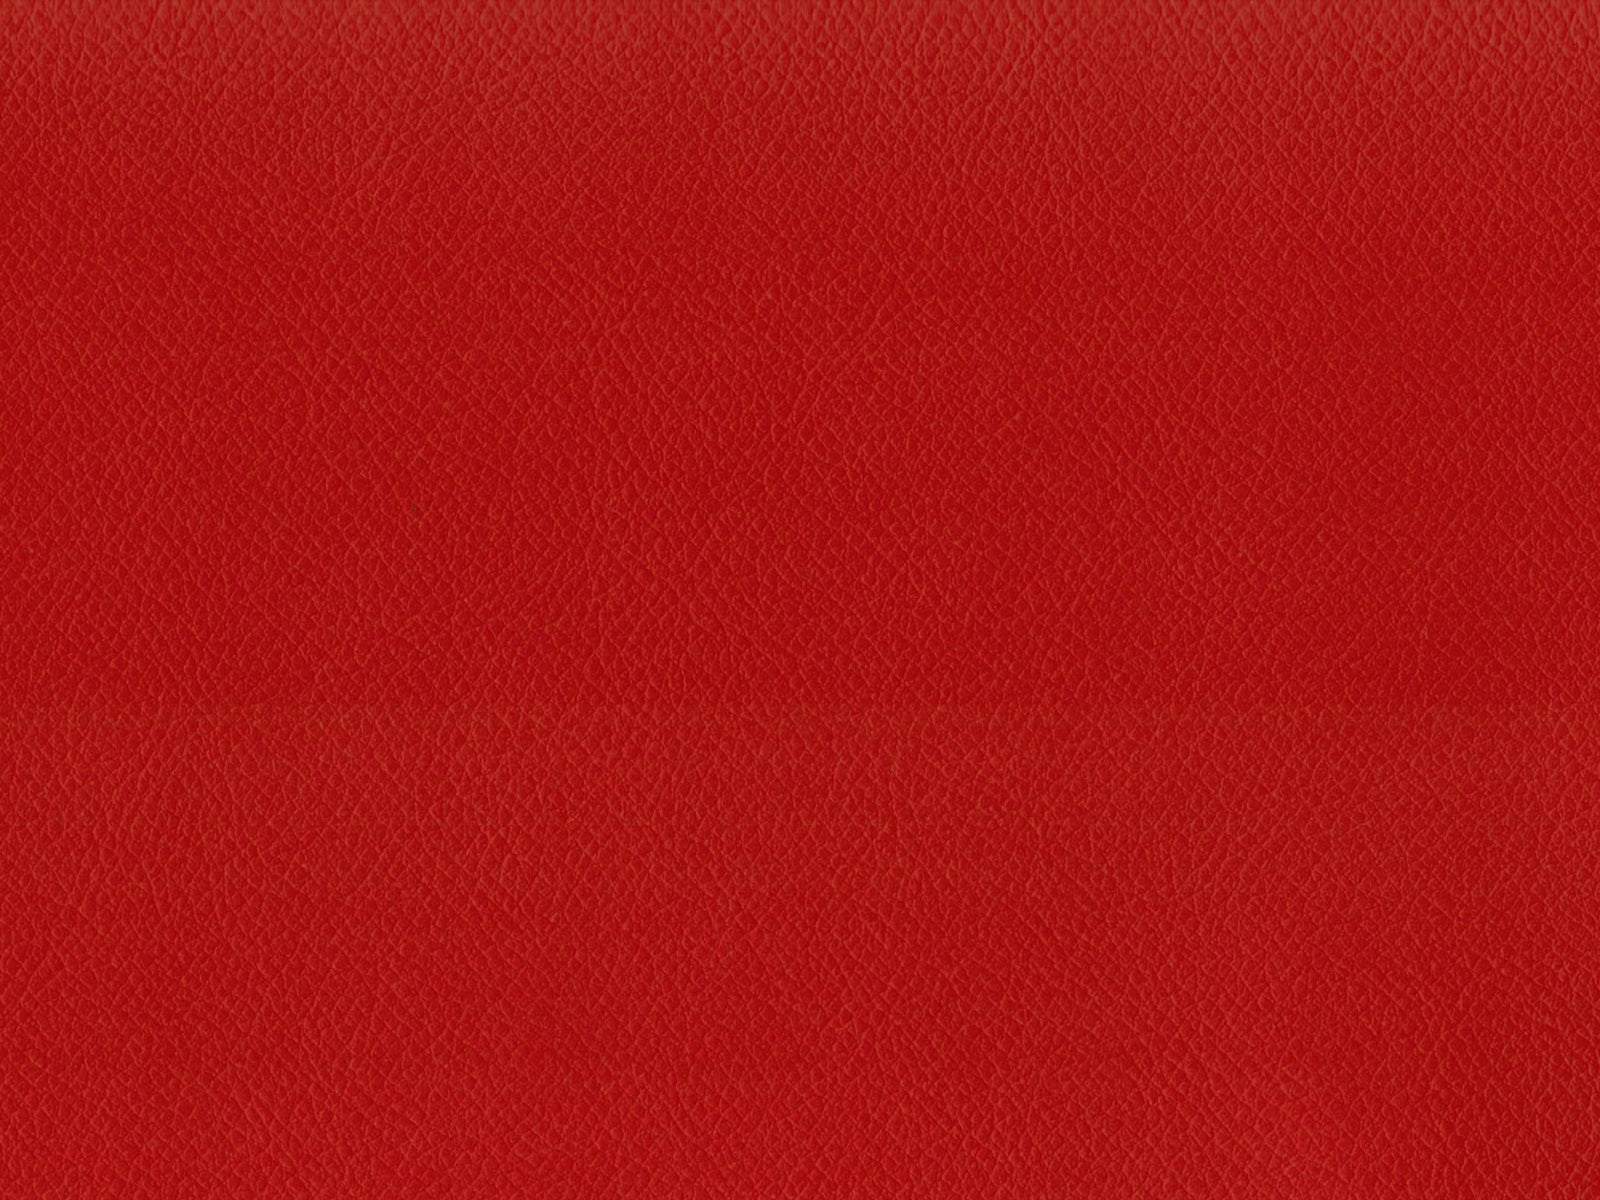 Enduro Fabric Samples - Rydan Interiors